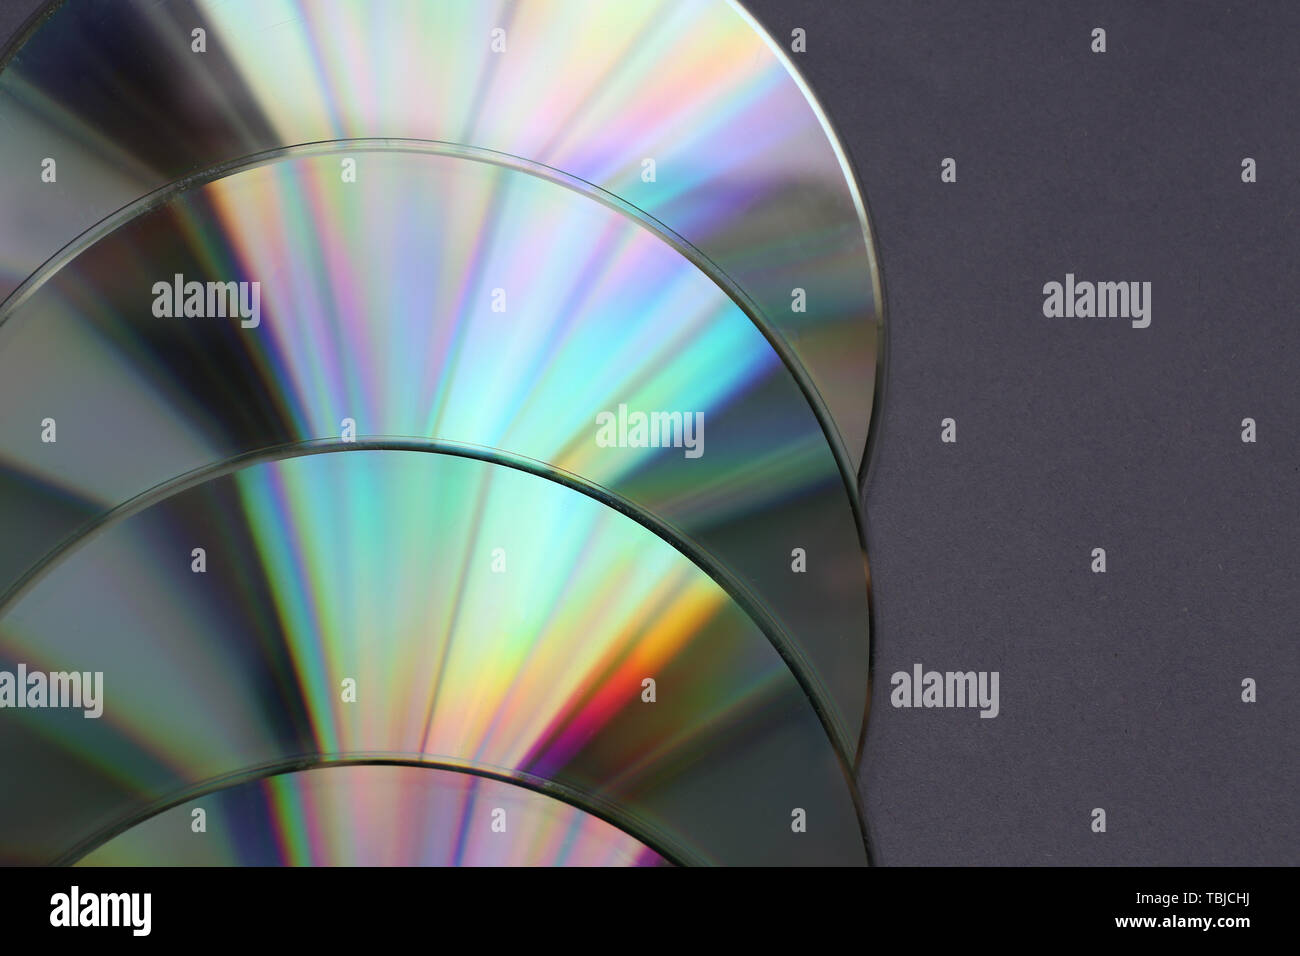 Shiny compact disks on dark background, closeup Stock Photo